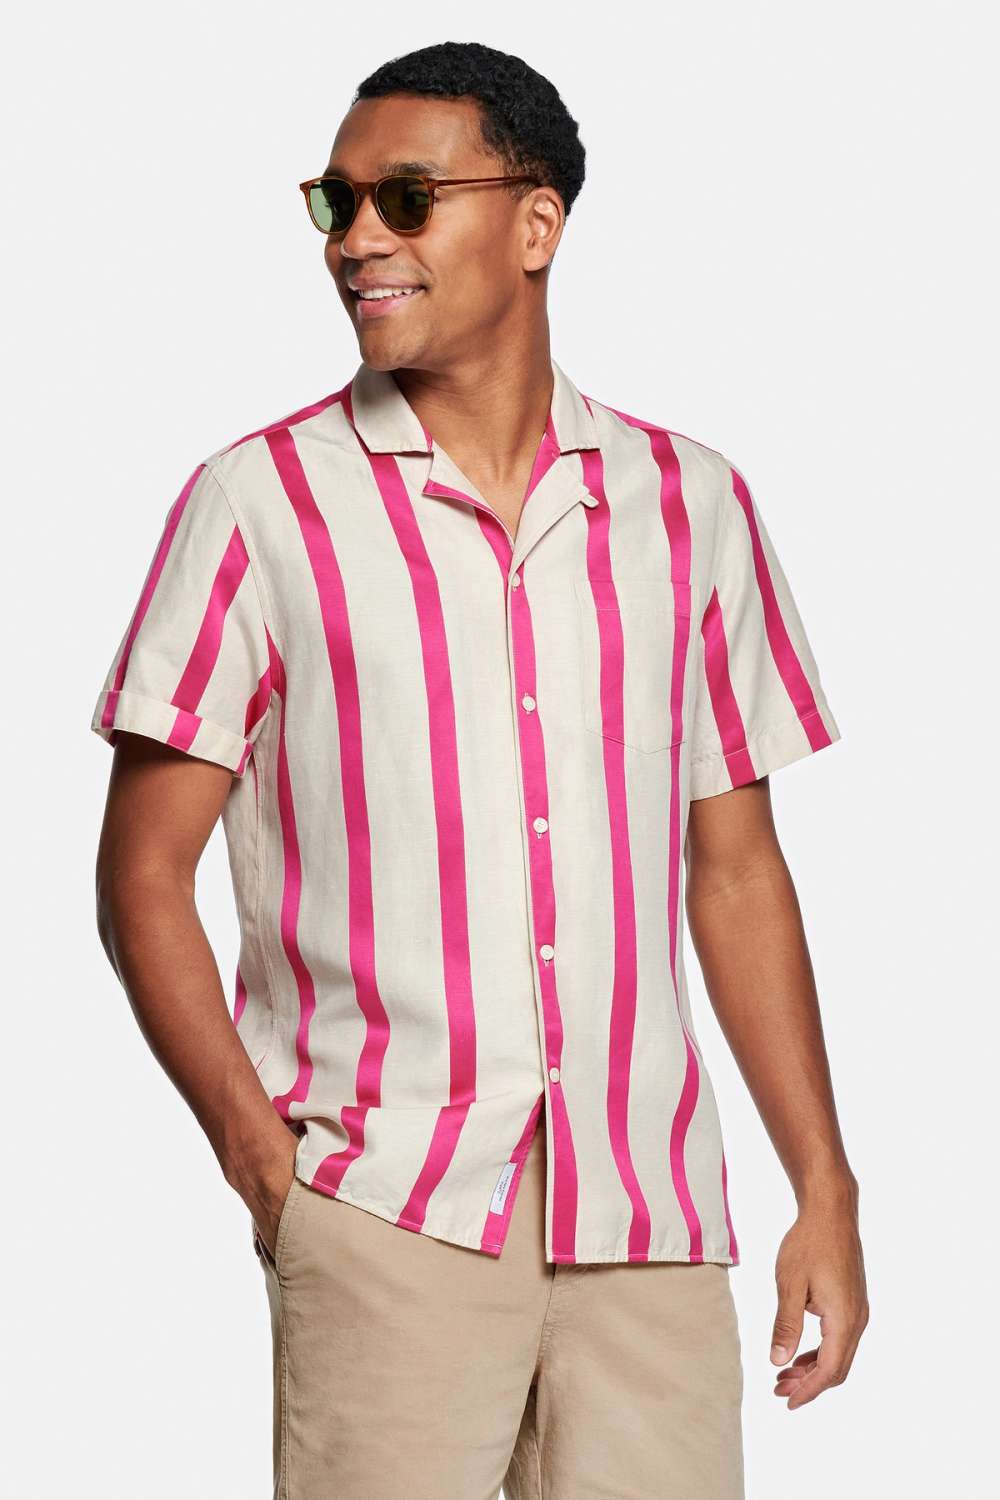 Rosa Stripes - The Summer Shirt